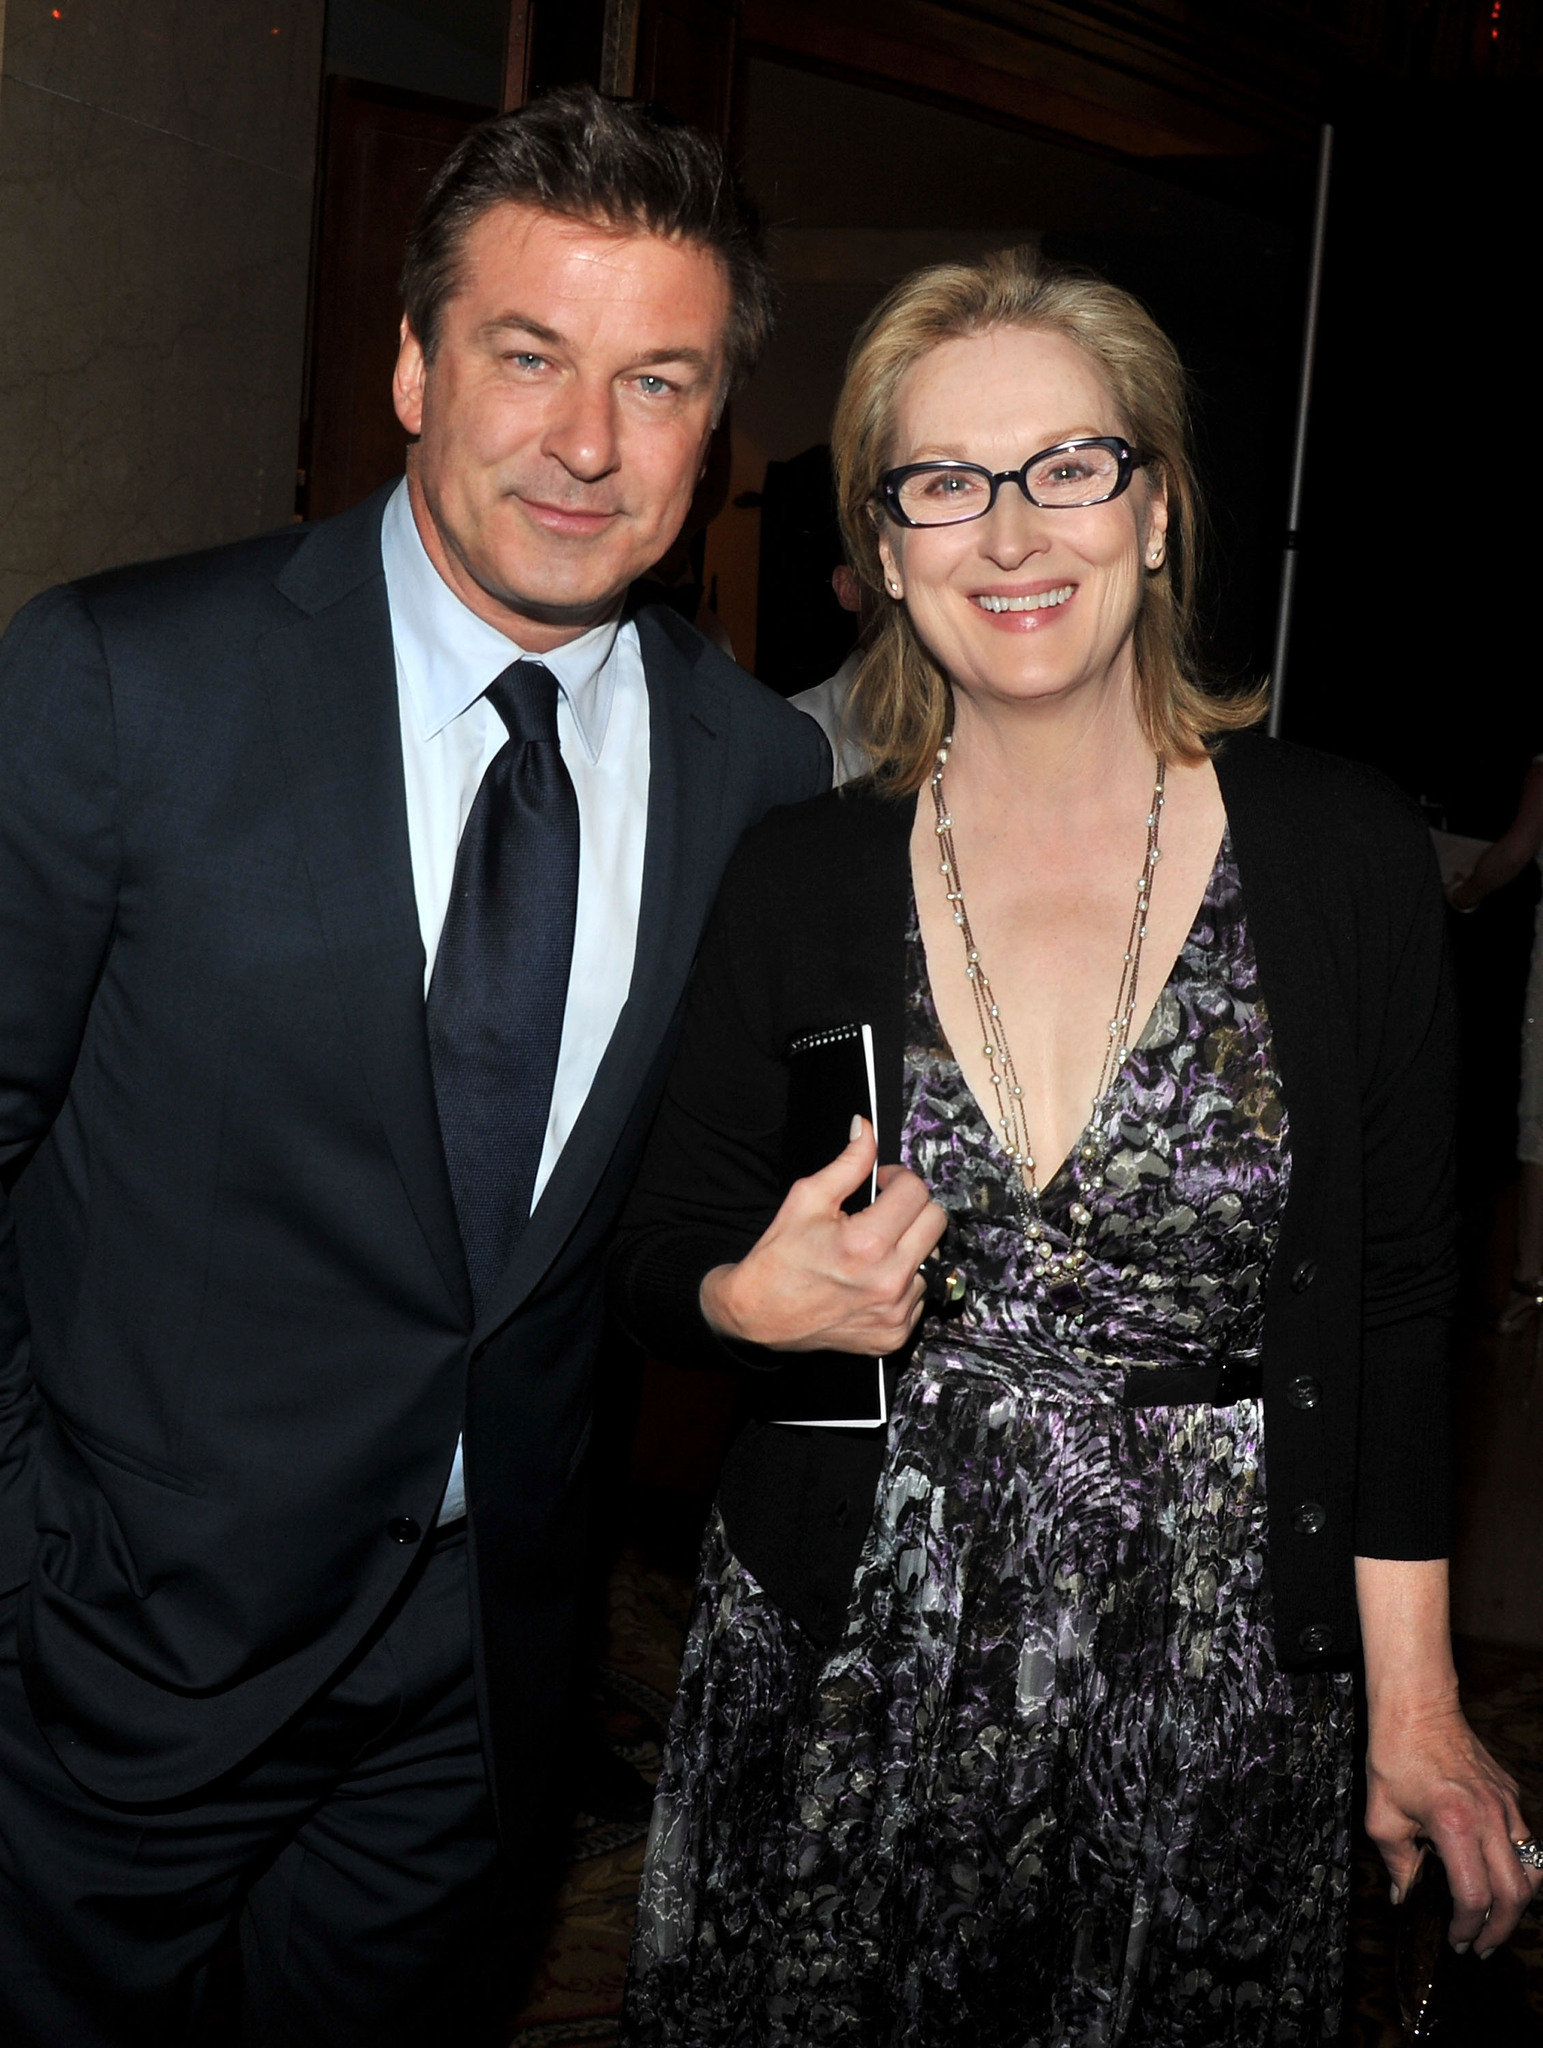 Alec Baldwin and Meryl Streep